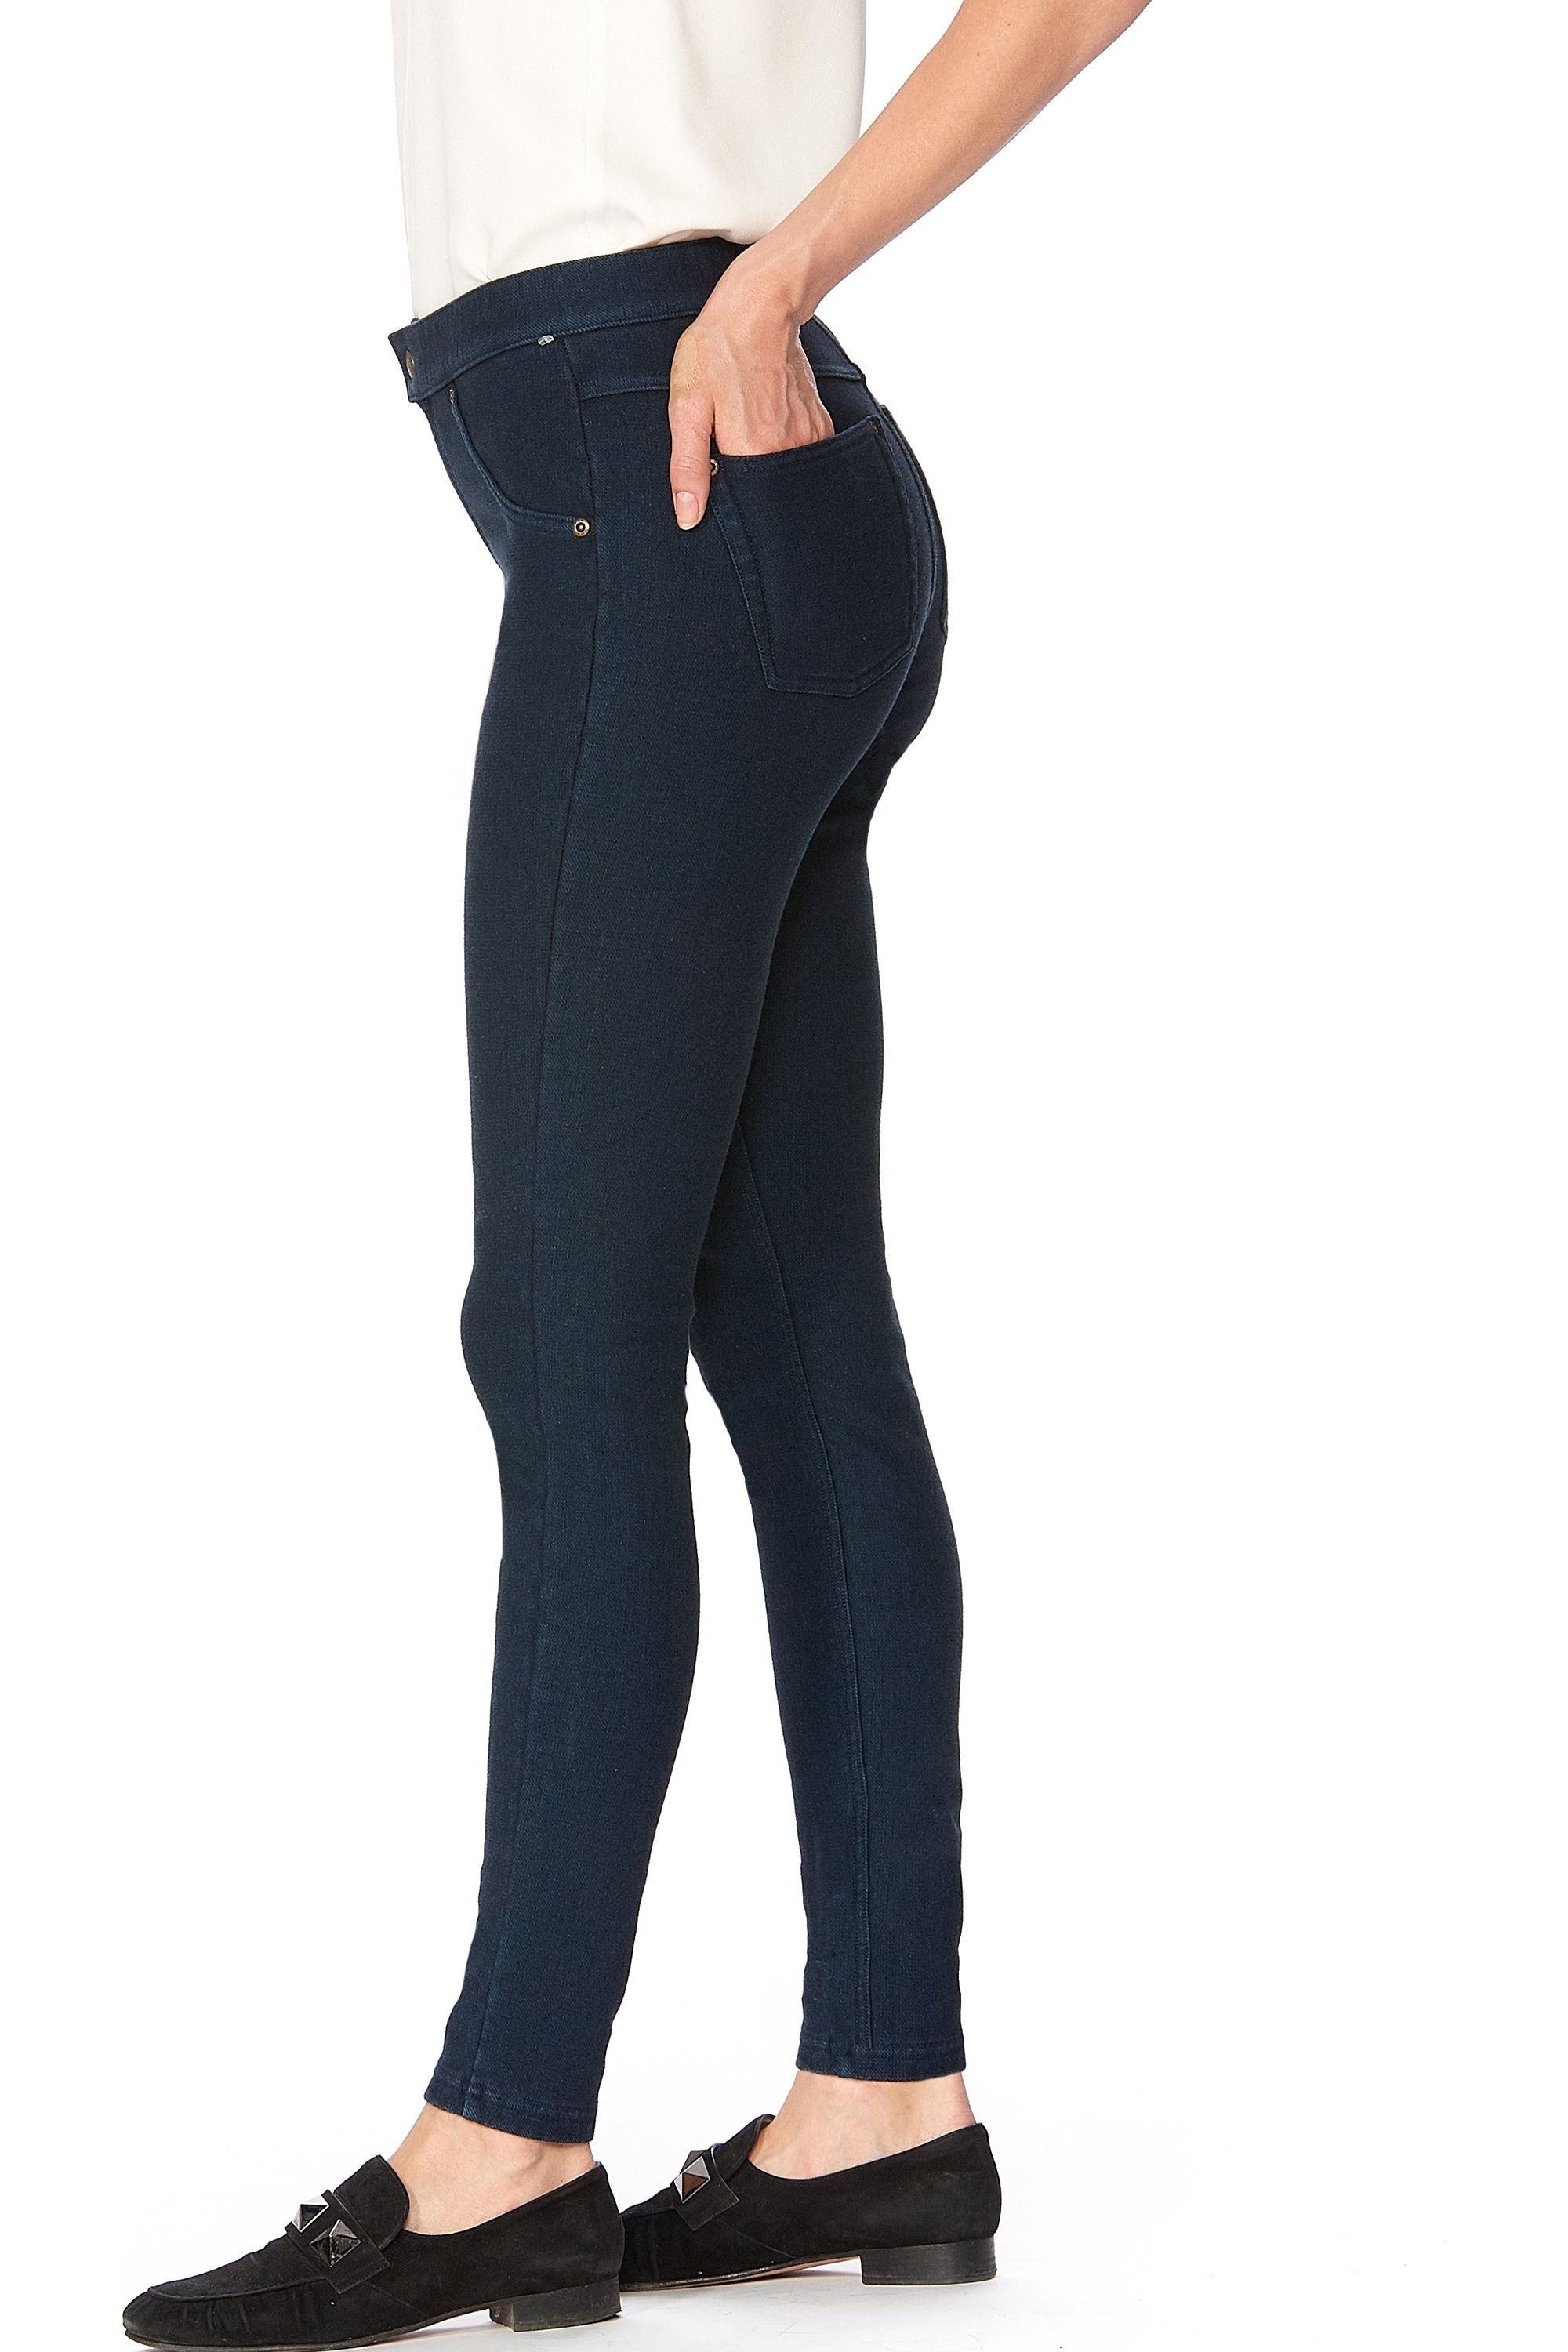 Women Fleece Lined Denim Jeans Thermal Spring Leggings Pants Stretch  Jeggings